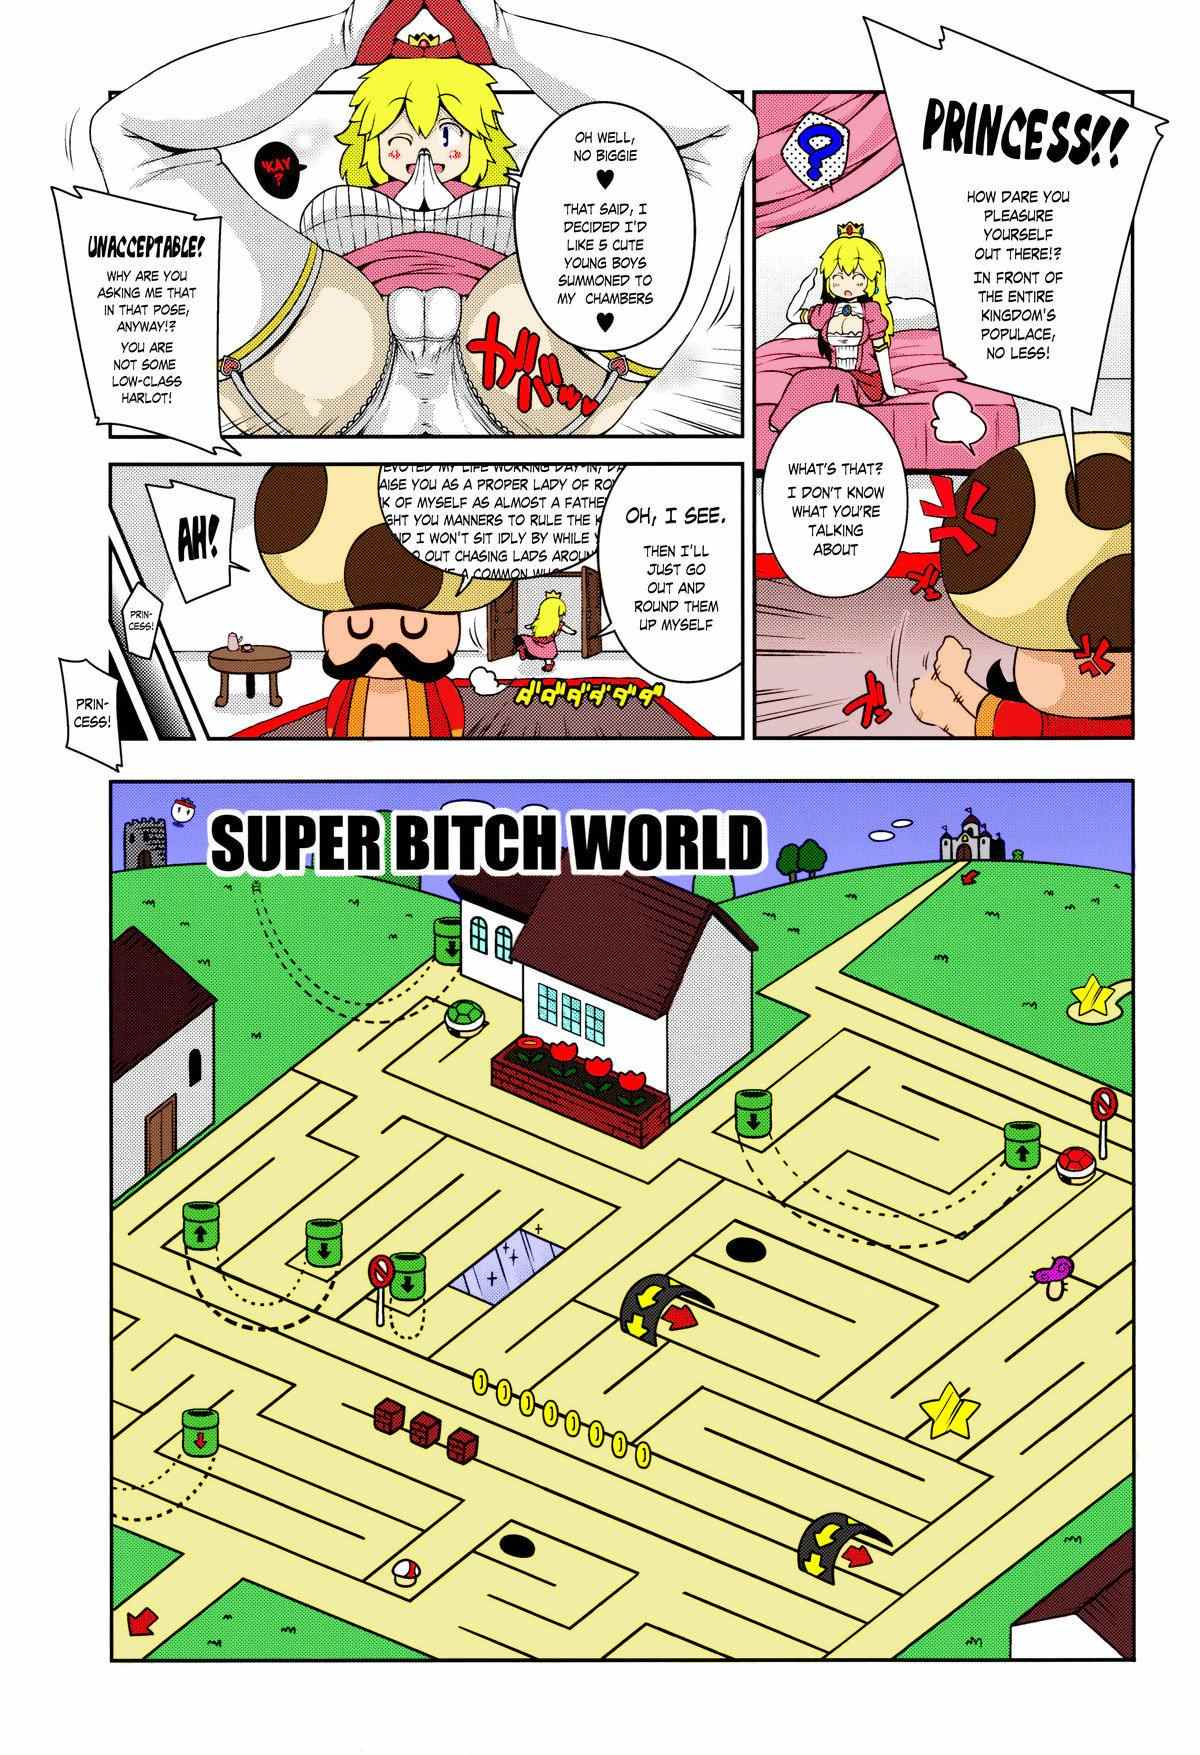 Super Bitch World Super Mario Bros Color 6